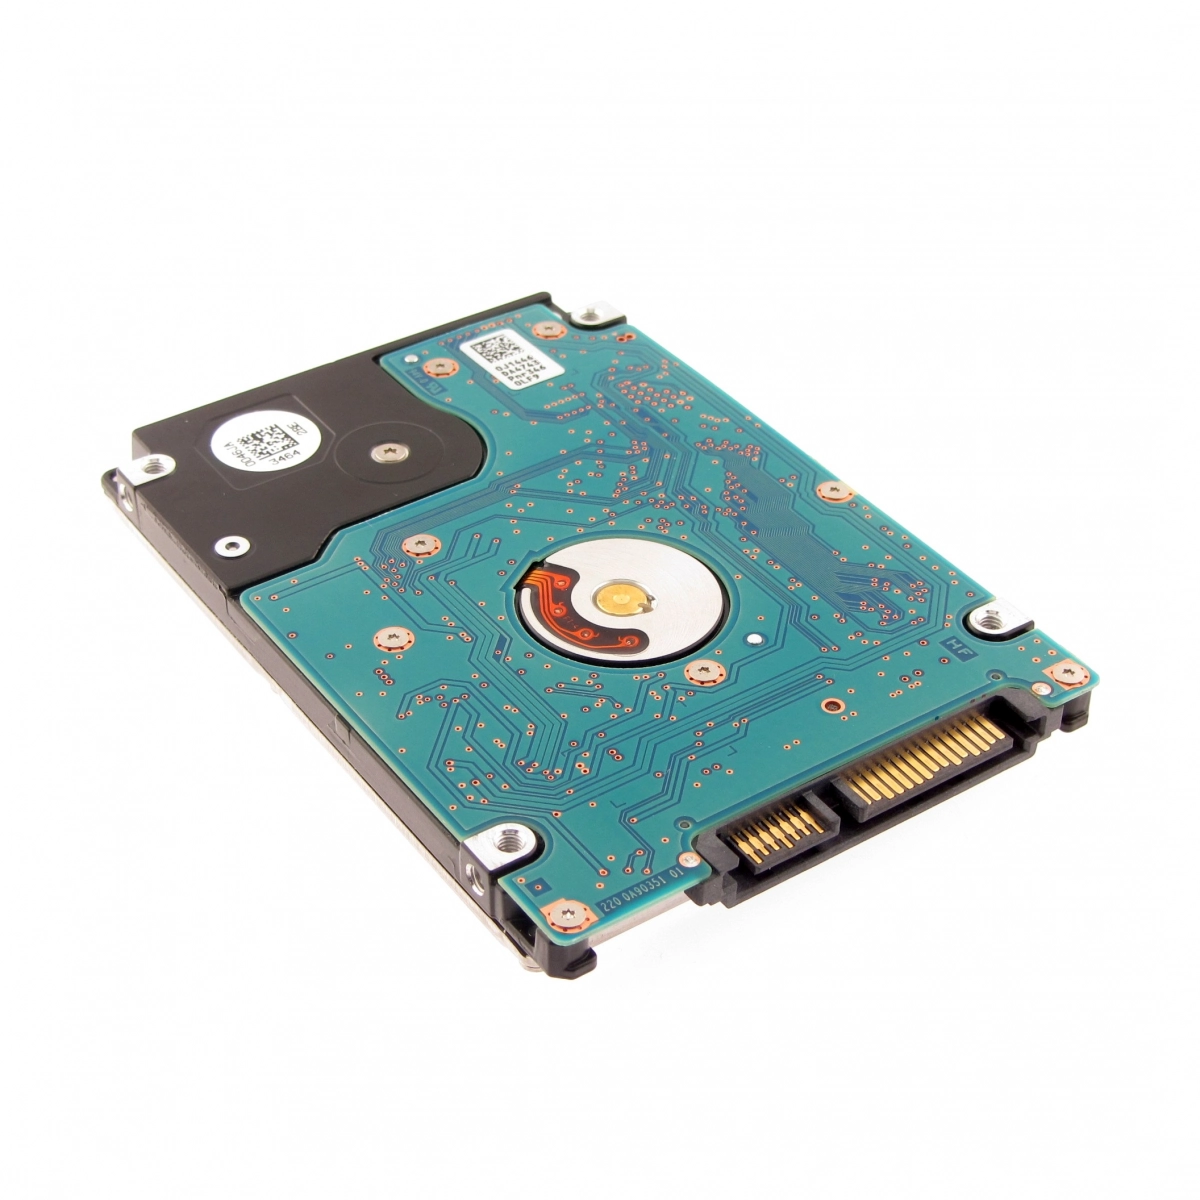 Notebook-Festplatte 1TB, 7mm, 7200rpm, 128MB für LENOVO ThinkPad T500 (2089)